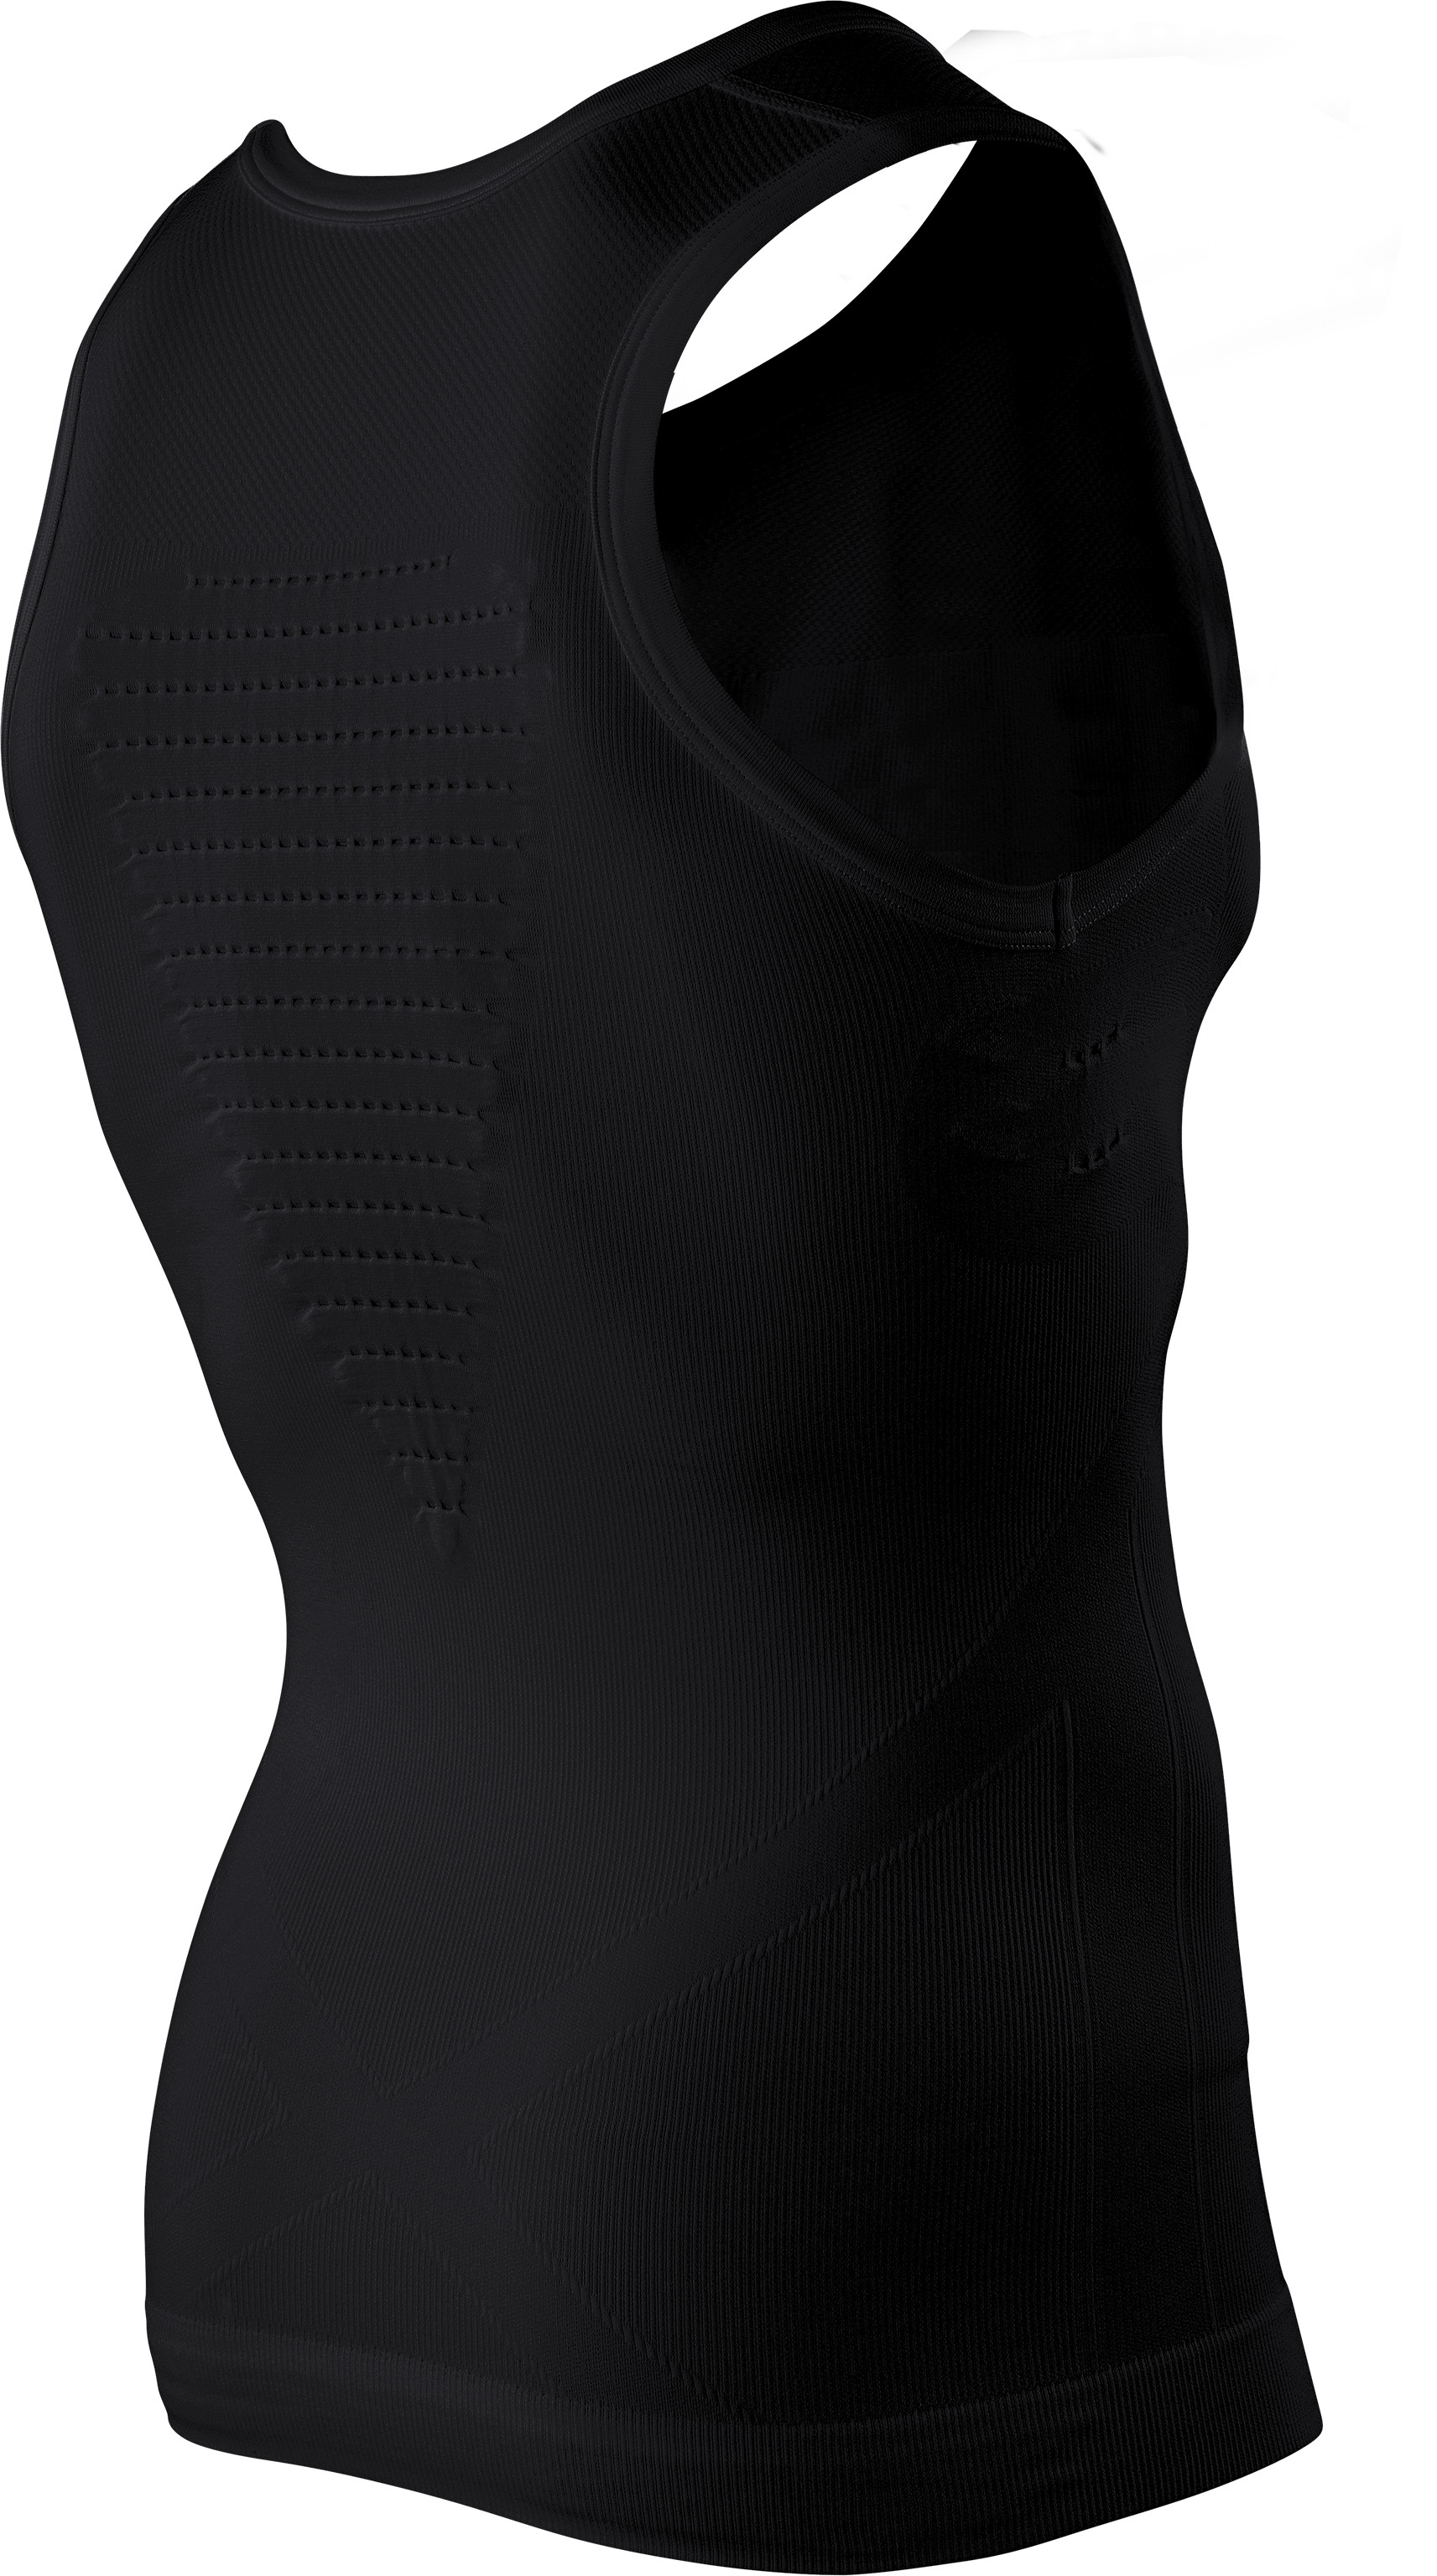 X-BIONIC Shirt Man Energizer Summerlight Singlet Front Black S17-XB1